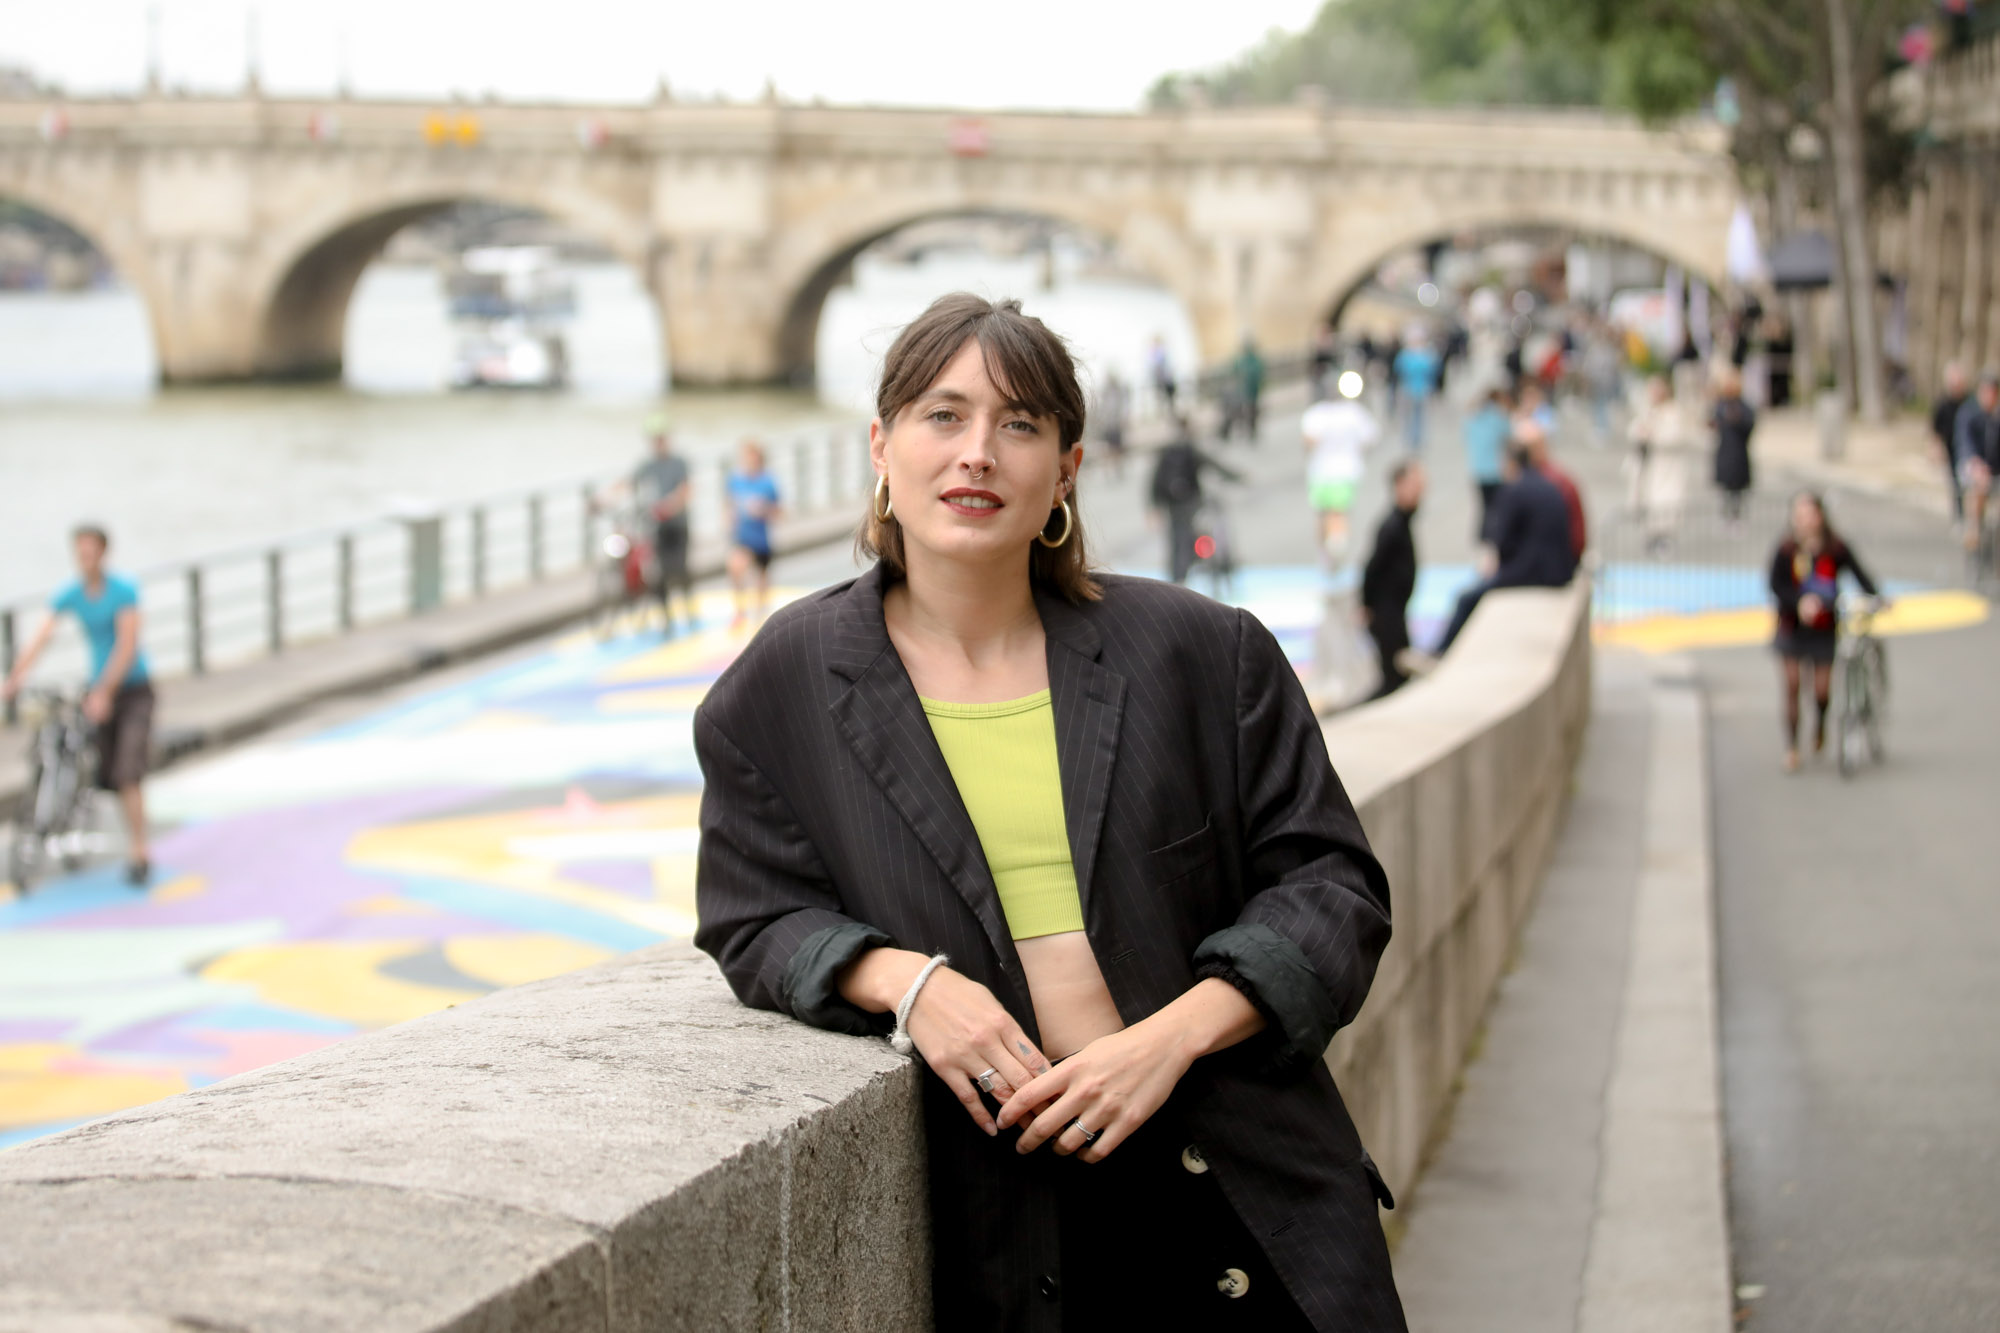 Audrey Laurençon poses the Asics mural she created on the Quai de Seine.